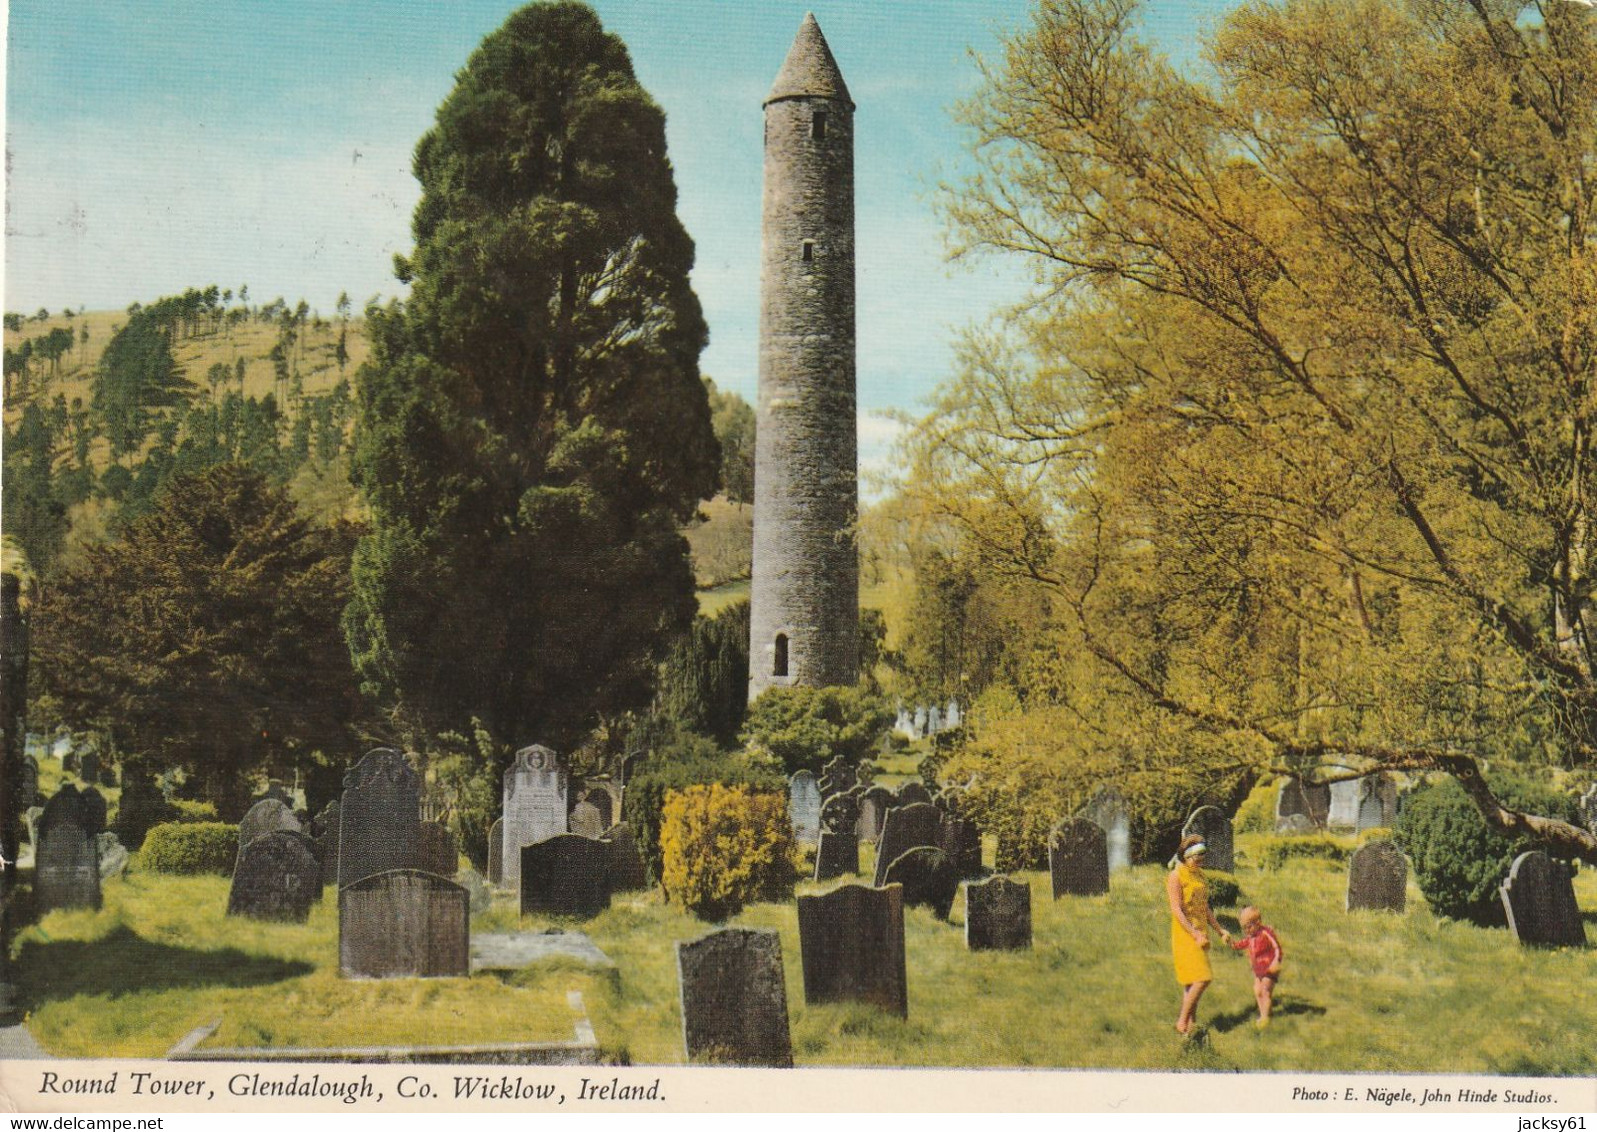 Round Tower, Glendalough, Co Wicklow, Ireland - Wicklow